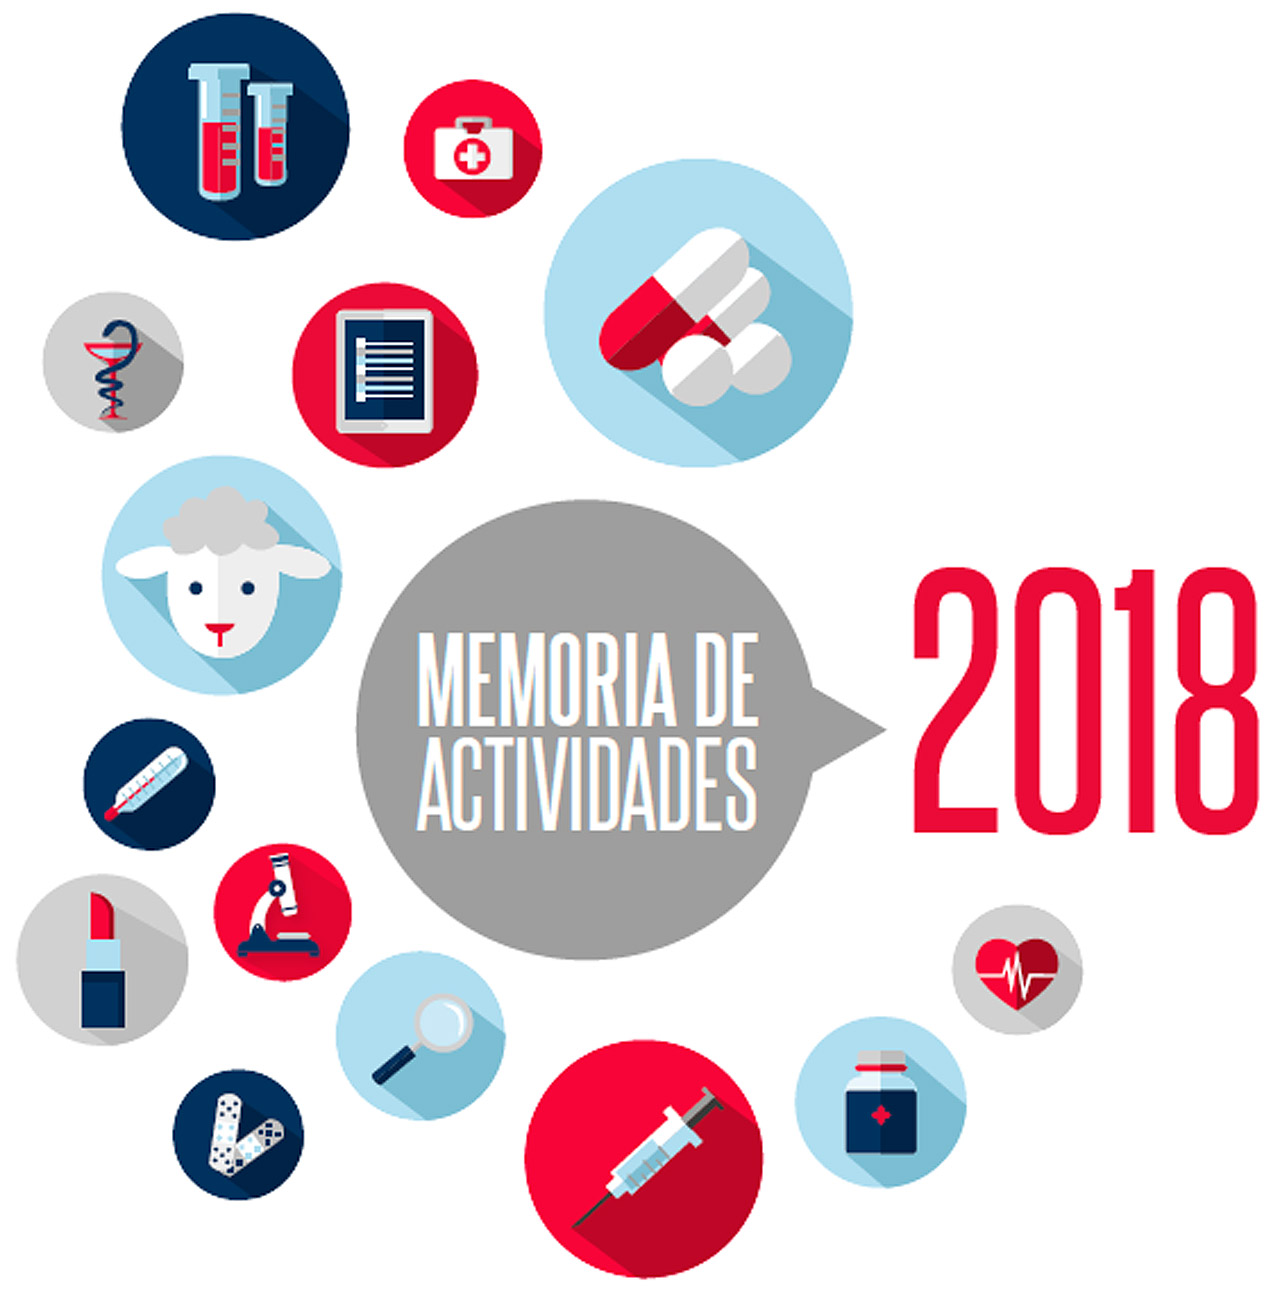 Portada de la Memoria de Actividades 2018 de la Aemps.